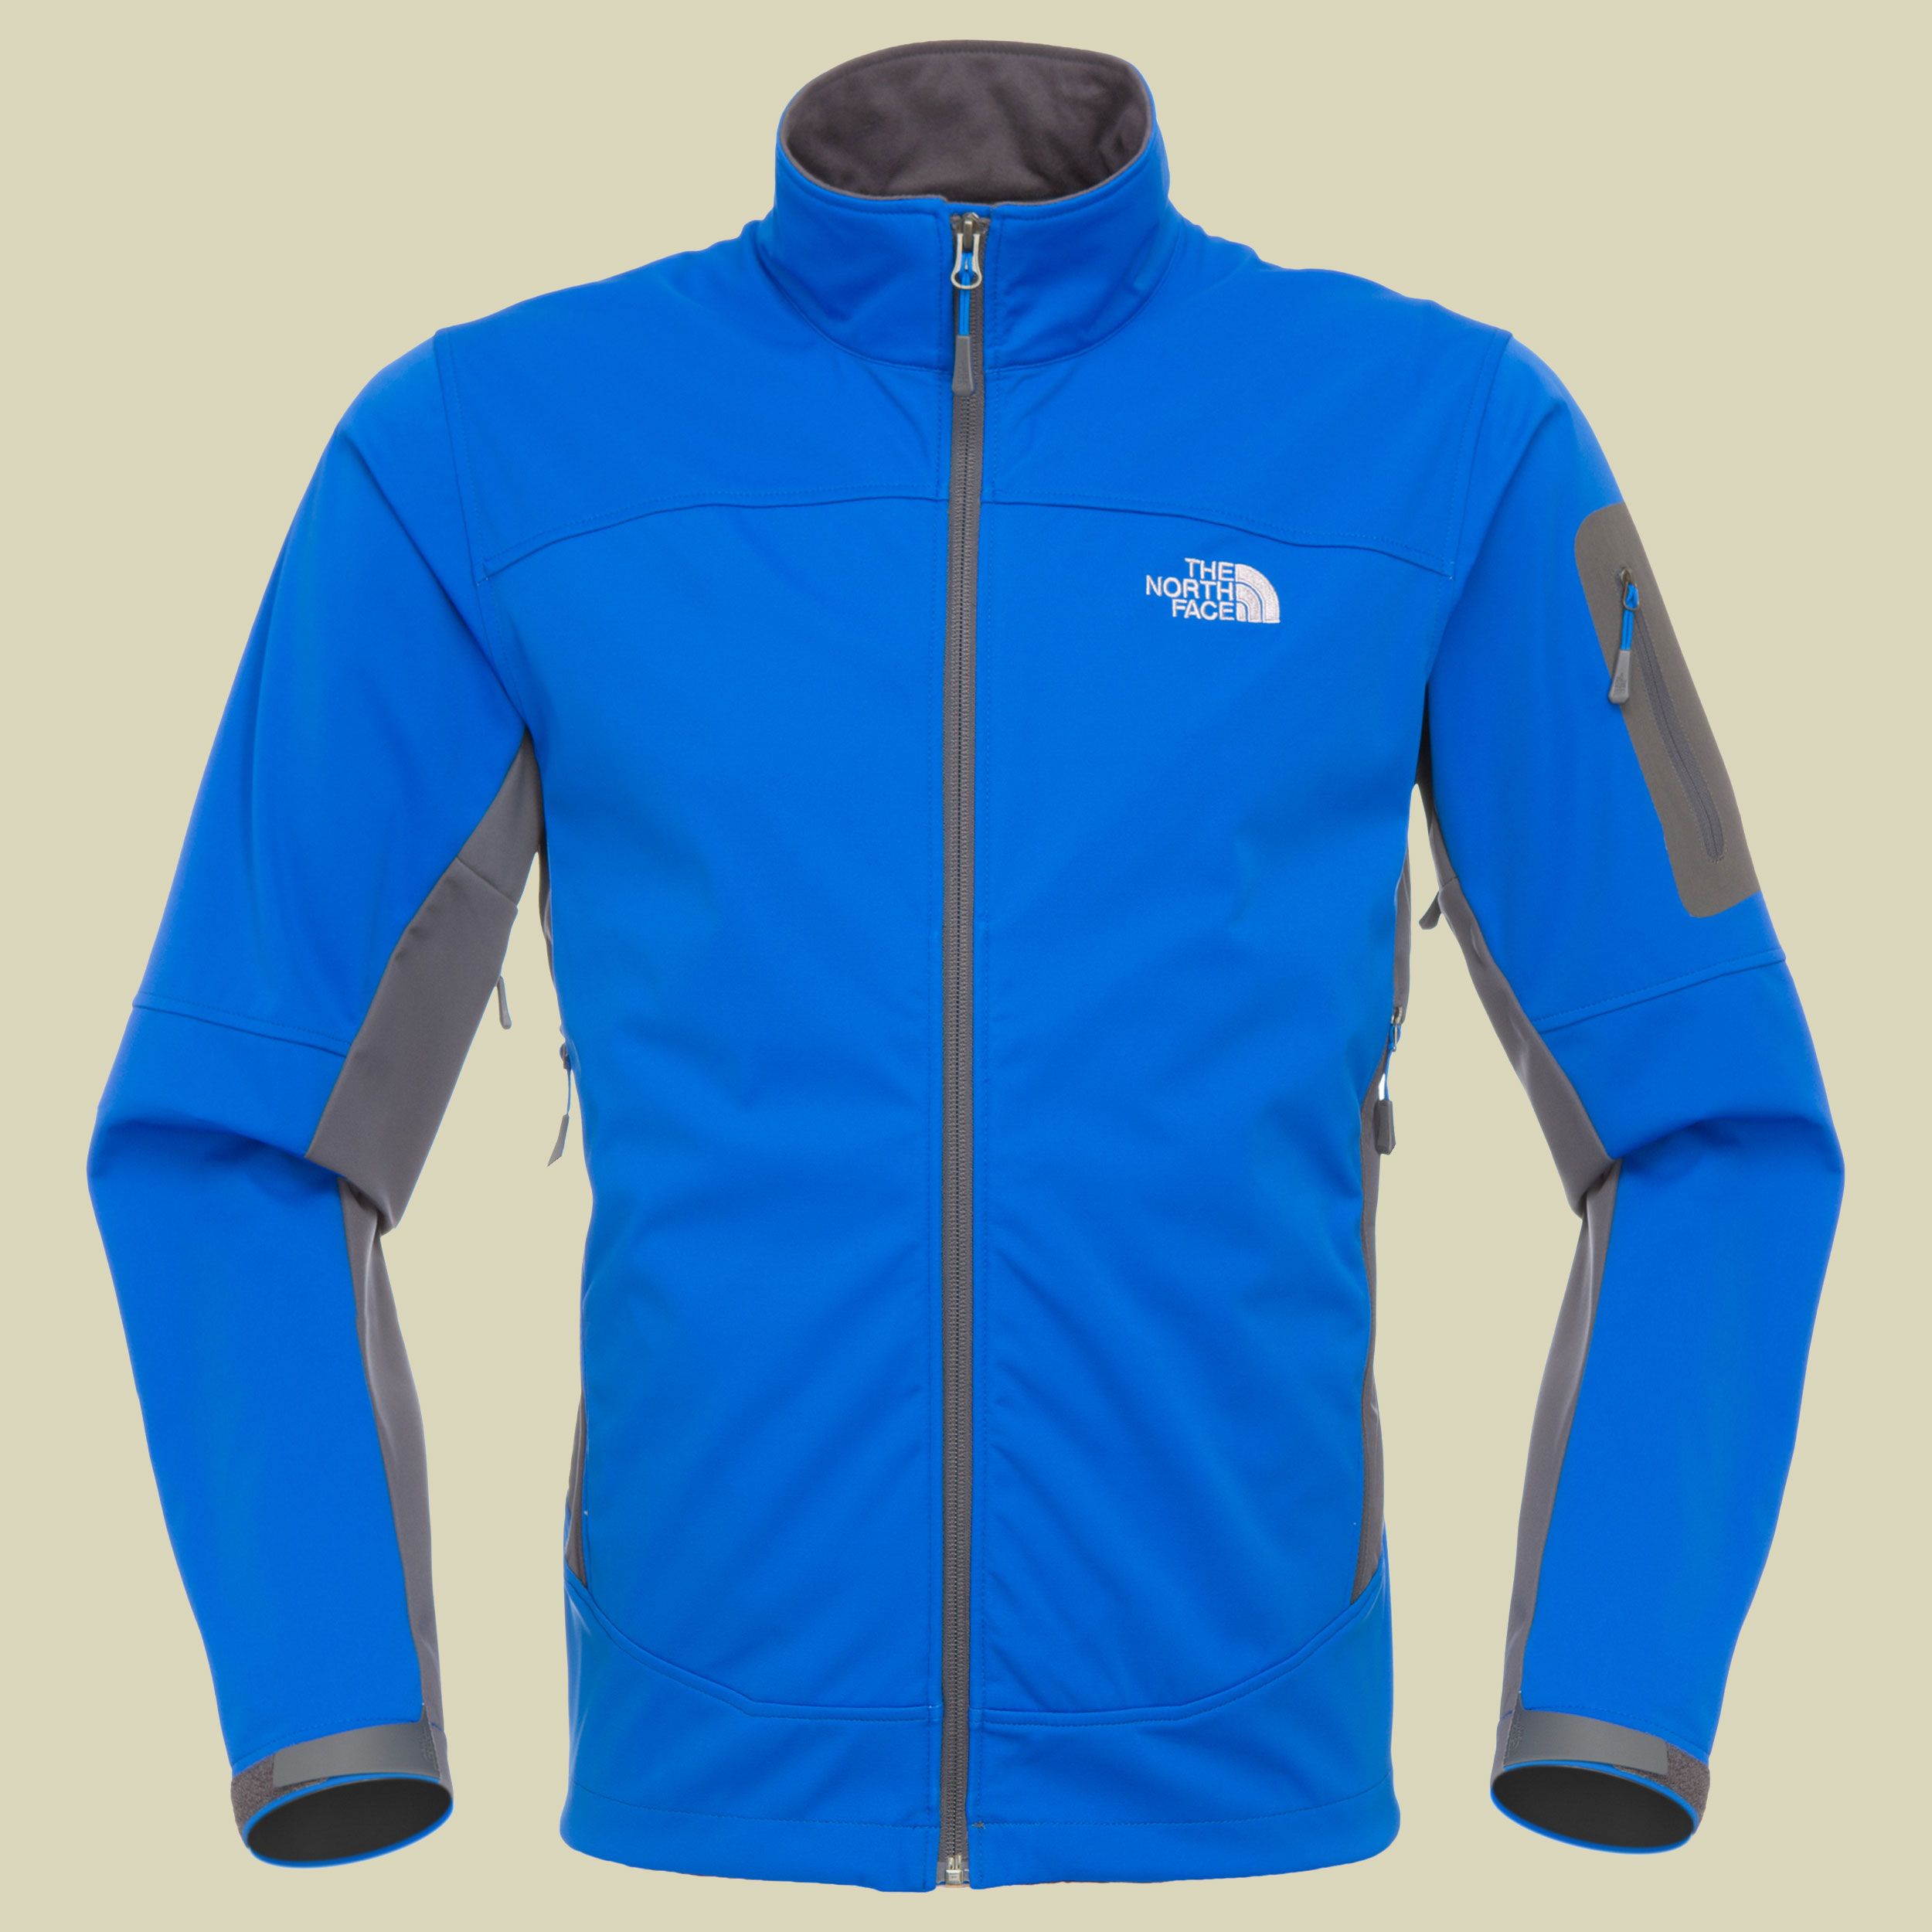 Cotopaxi Jacket Men Größe S Farbe nautical blue-asphalt grey